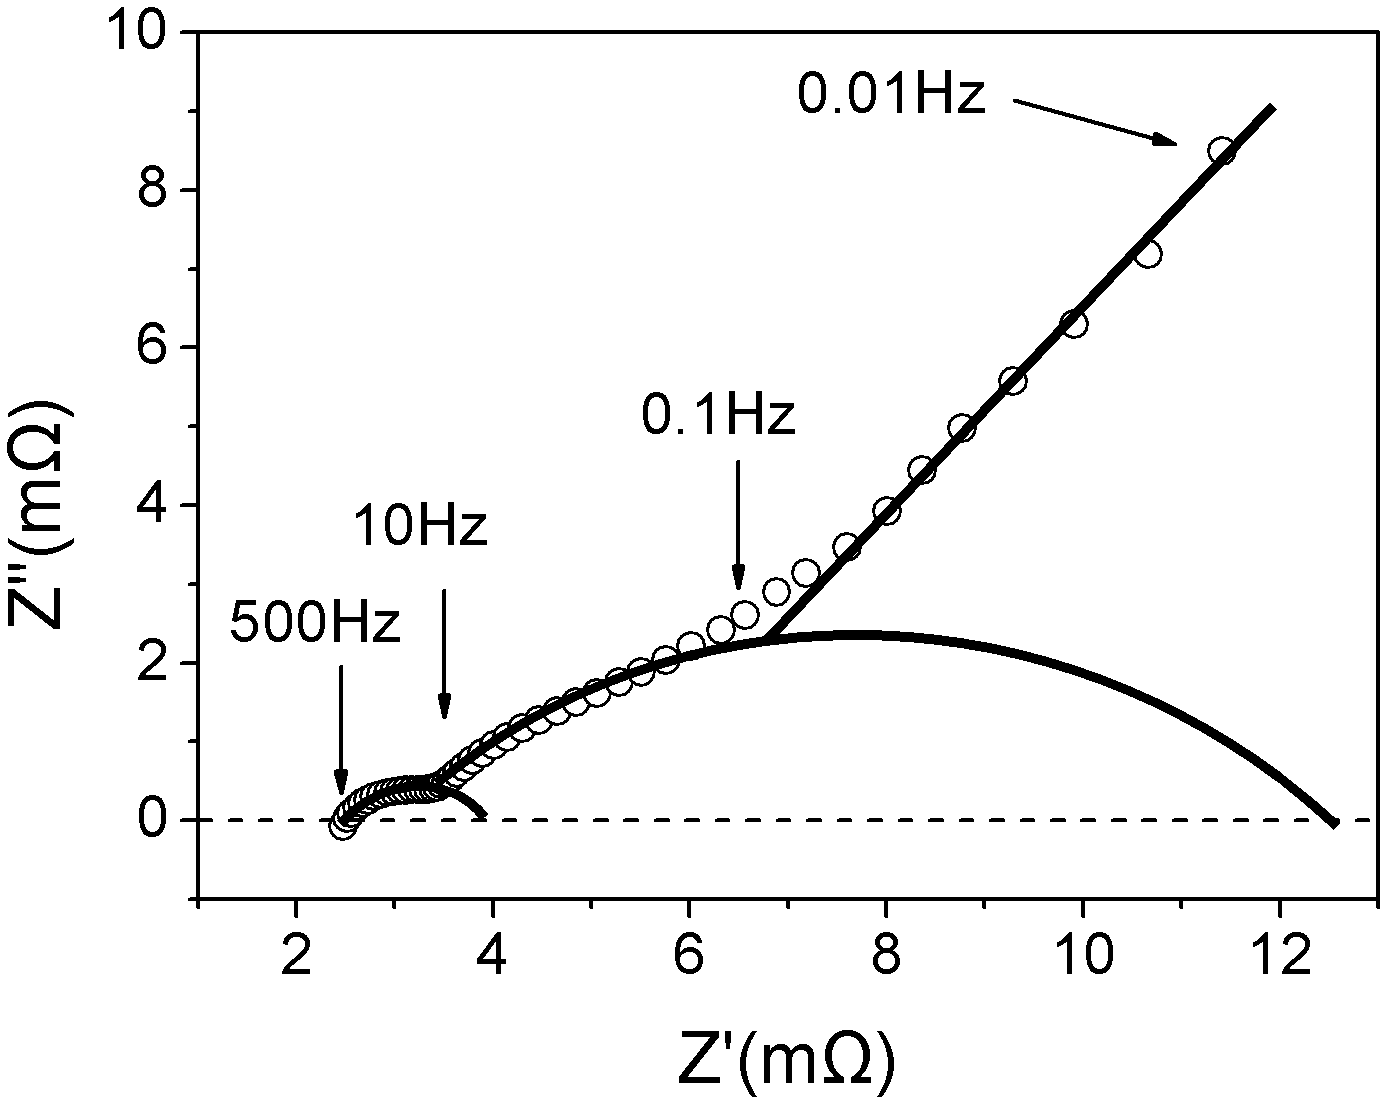 Battery sorting method based on alternating-current impedance spectrum